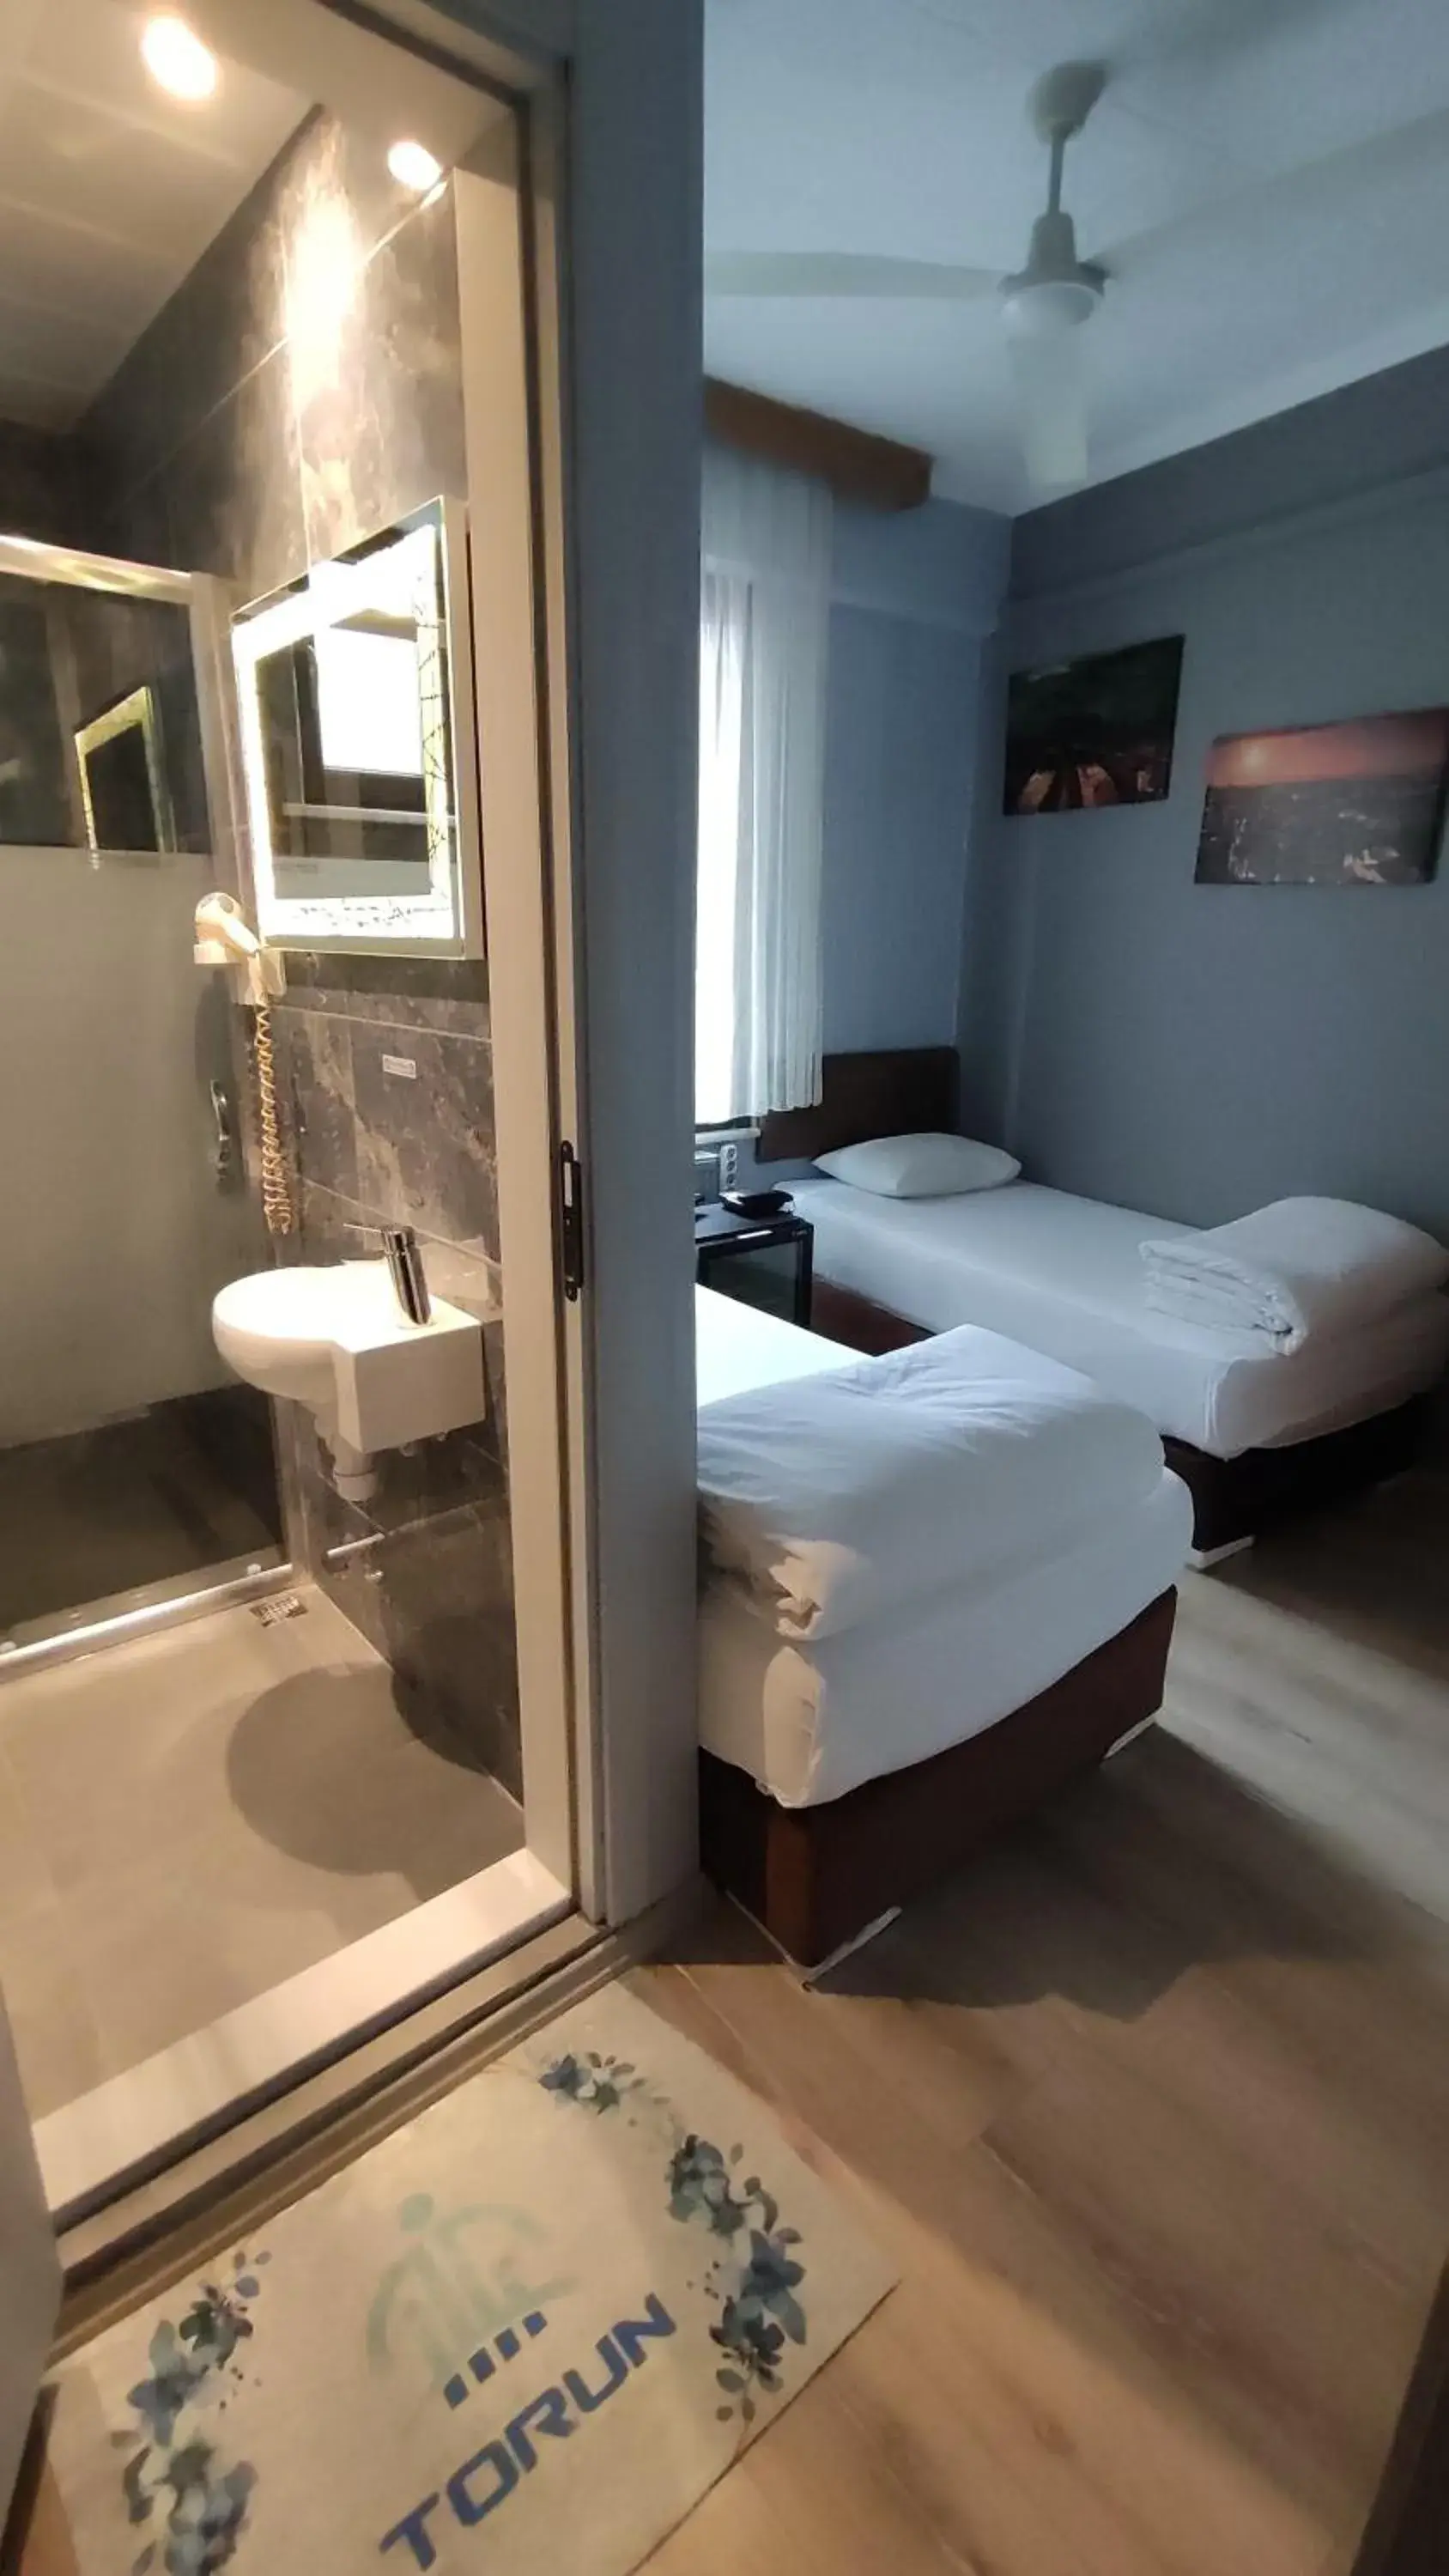 Photo of the whole room, Bathroom in Hotel Torun